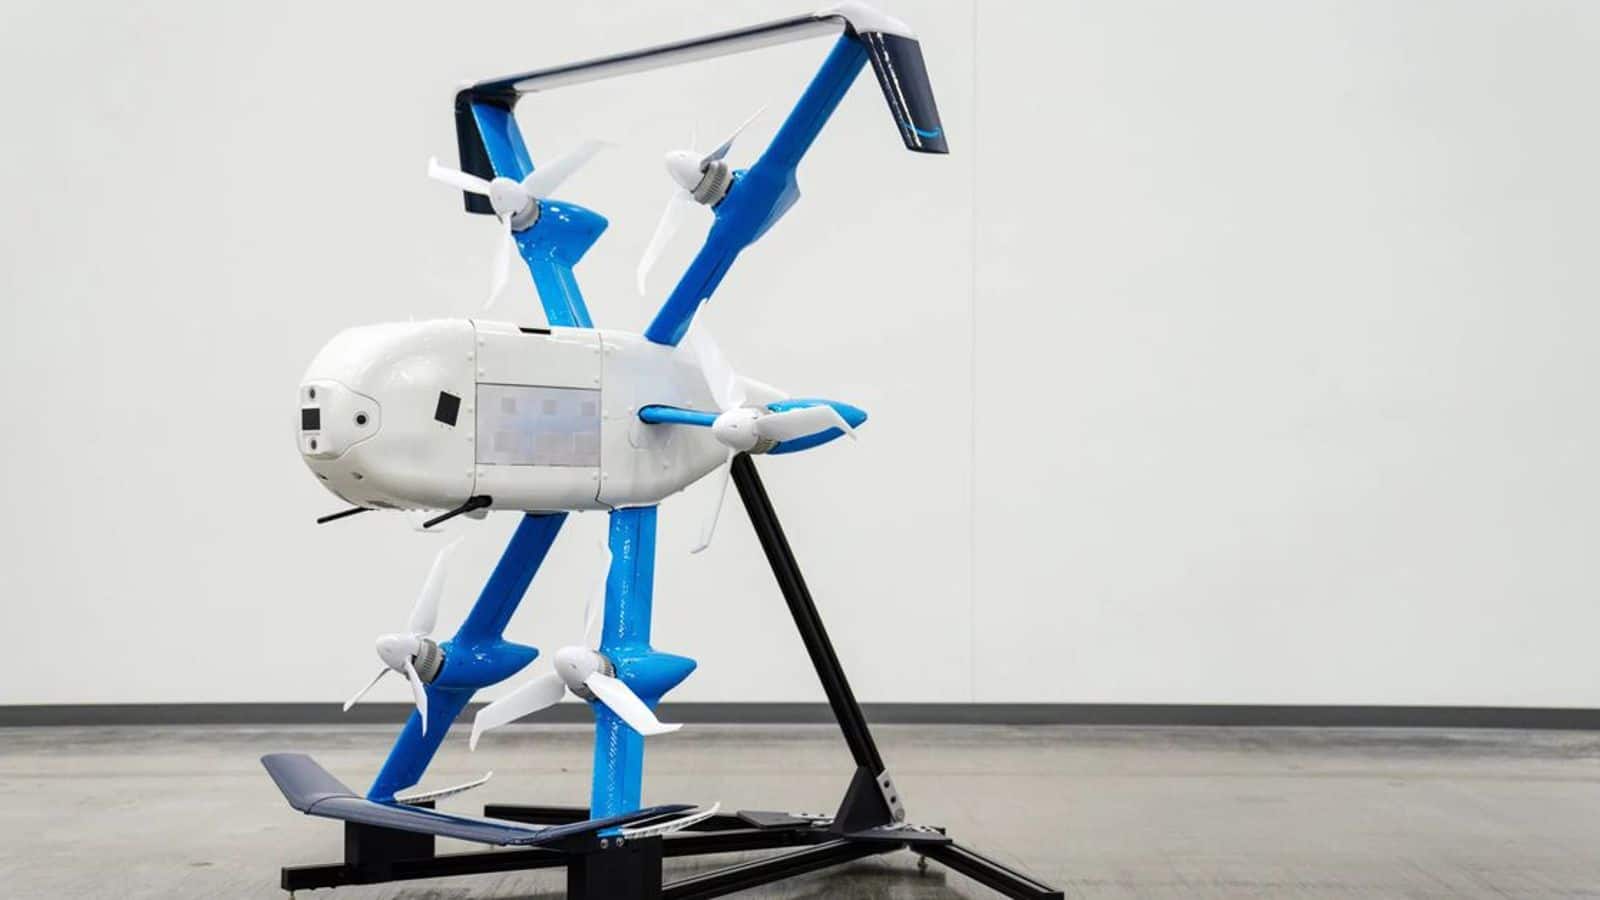 Amazon discontinues Prime Air drone delivery service in California